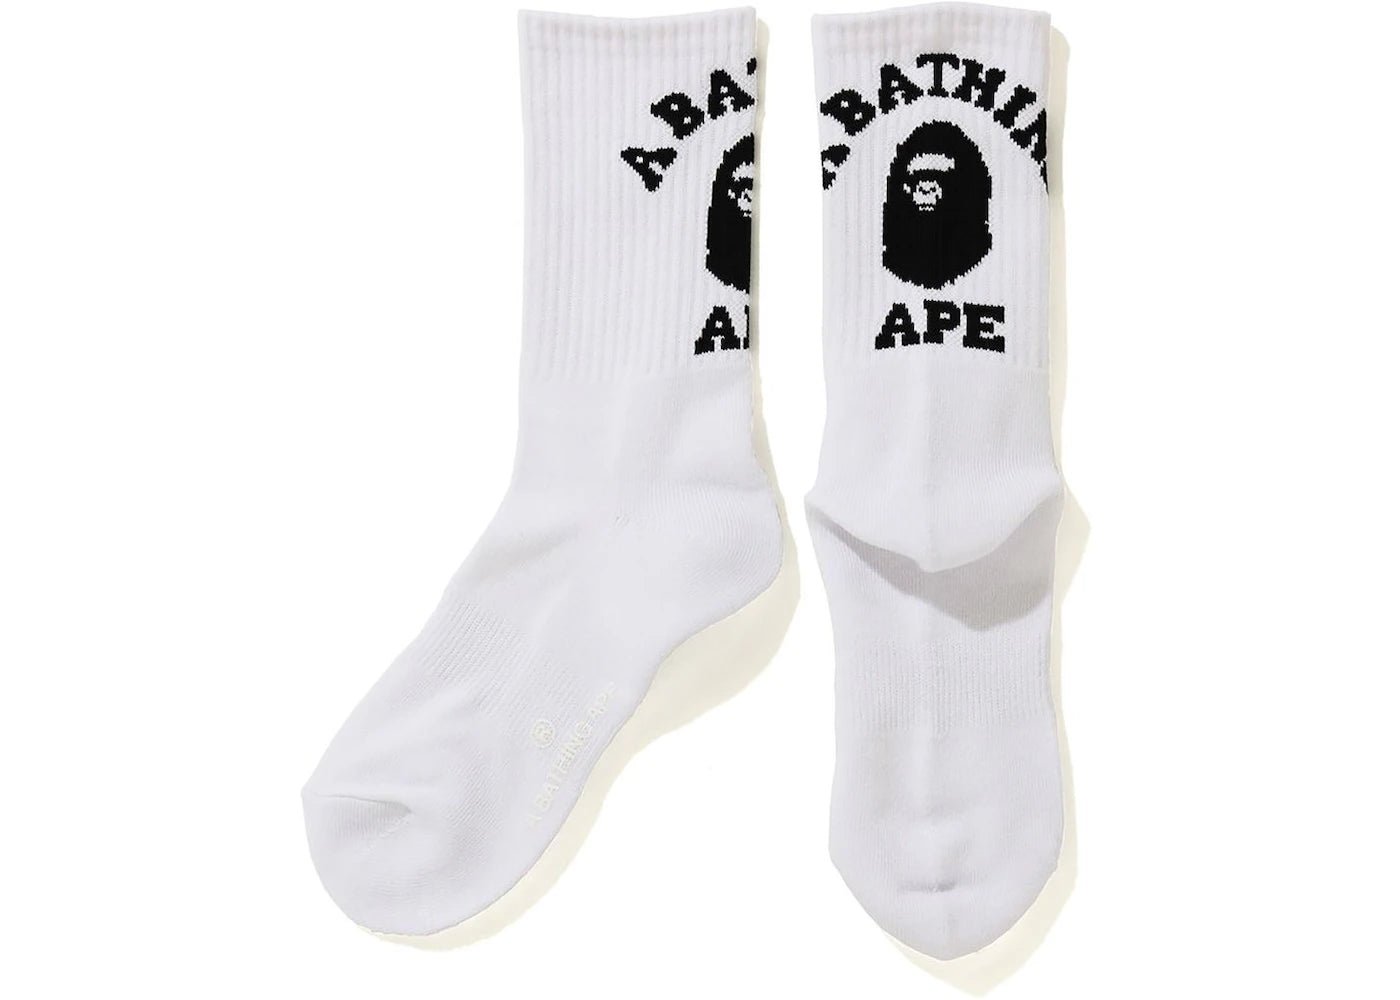 BAPE College Socks White Black - Supra Sneakers